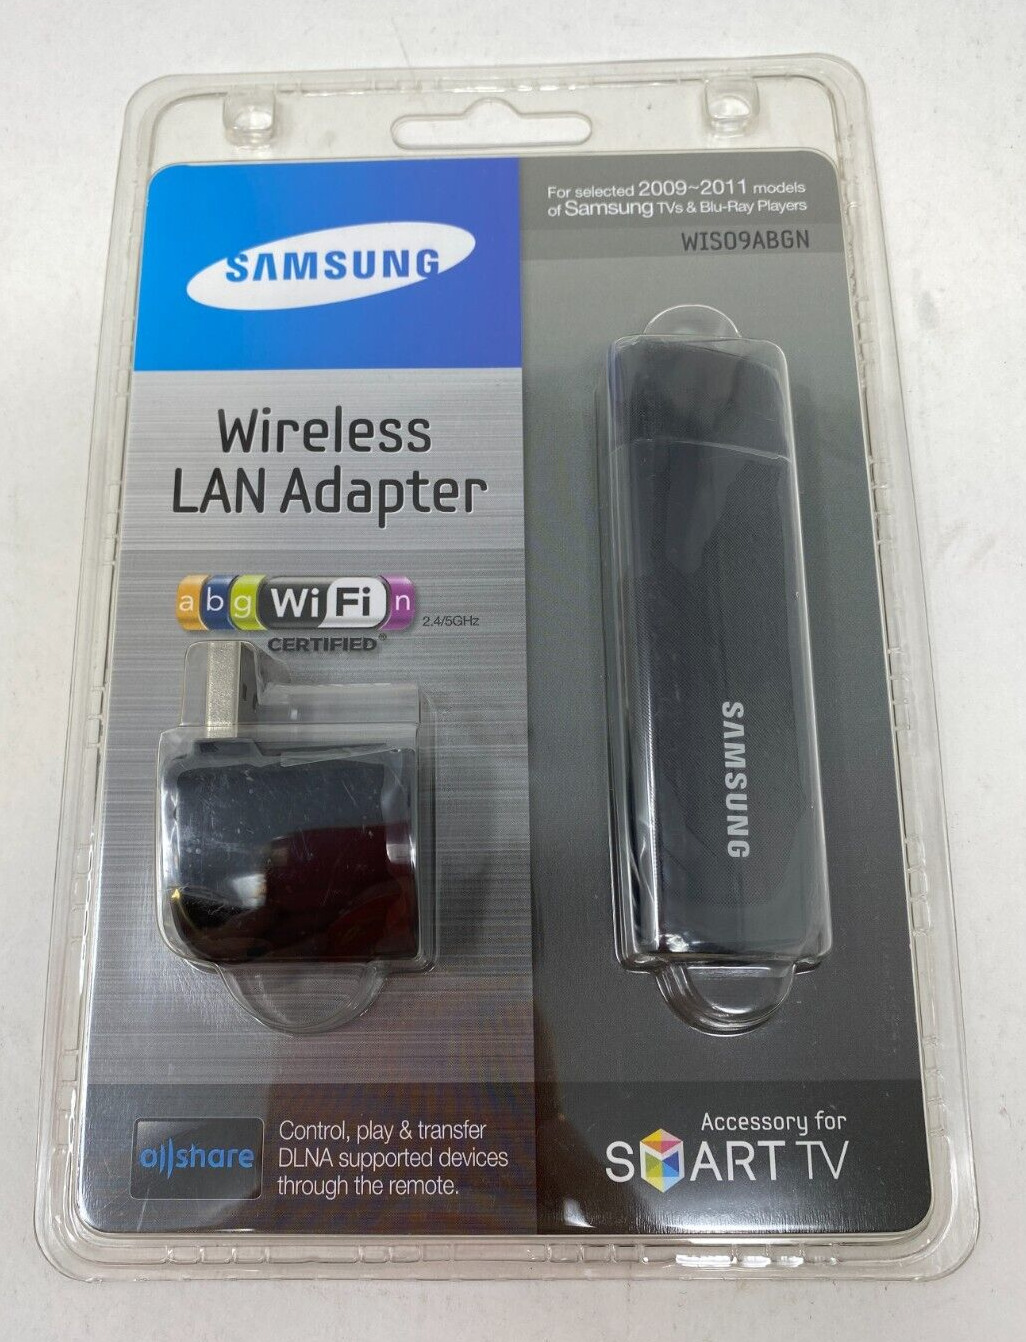 Samsung Link Stick Wireless Wi-Fi LAN Adapter Model WISO9ABGN Brand New Sealed